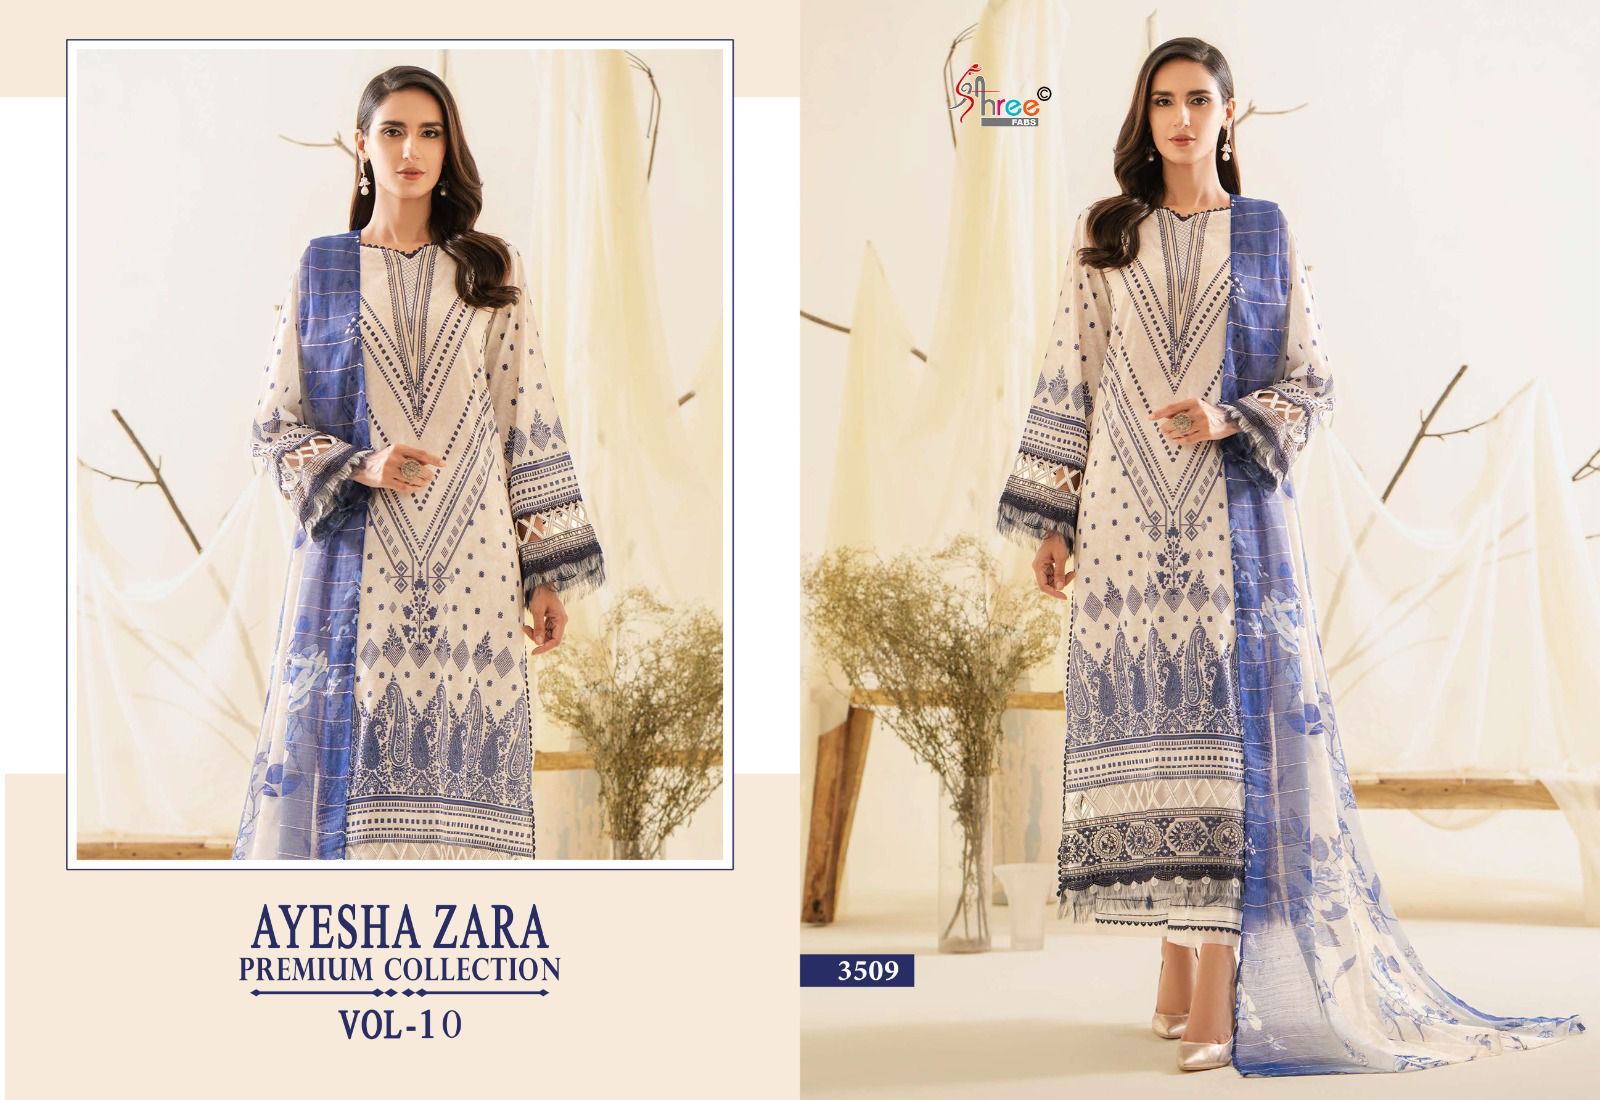 Ayesha Zara Premium Collection Vol 10 Shree Fabs Cotton Pakistani Patch Work Suits